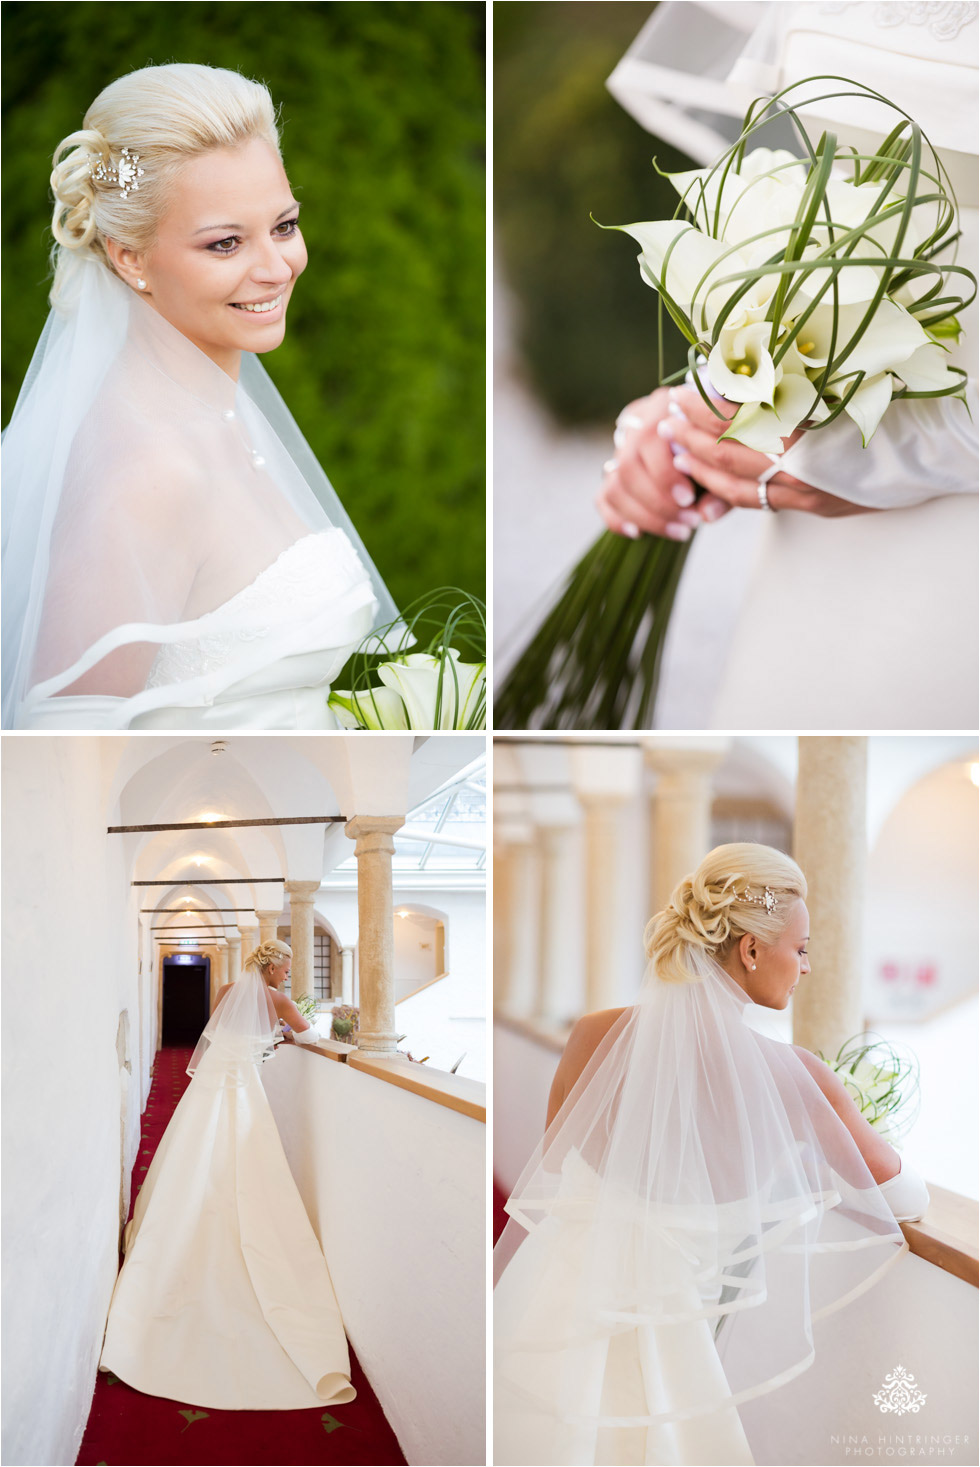 Beautiful and emotional wedding at Schloss Gabelhofen | Fohnsdorf, Styria - Blog of Nina Hintringer Photography - Wedding Photography, Wedding Reportage and Destination Weddings